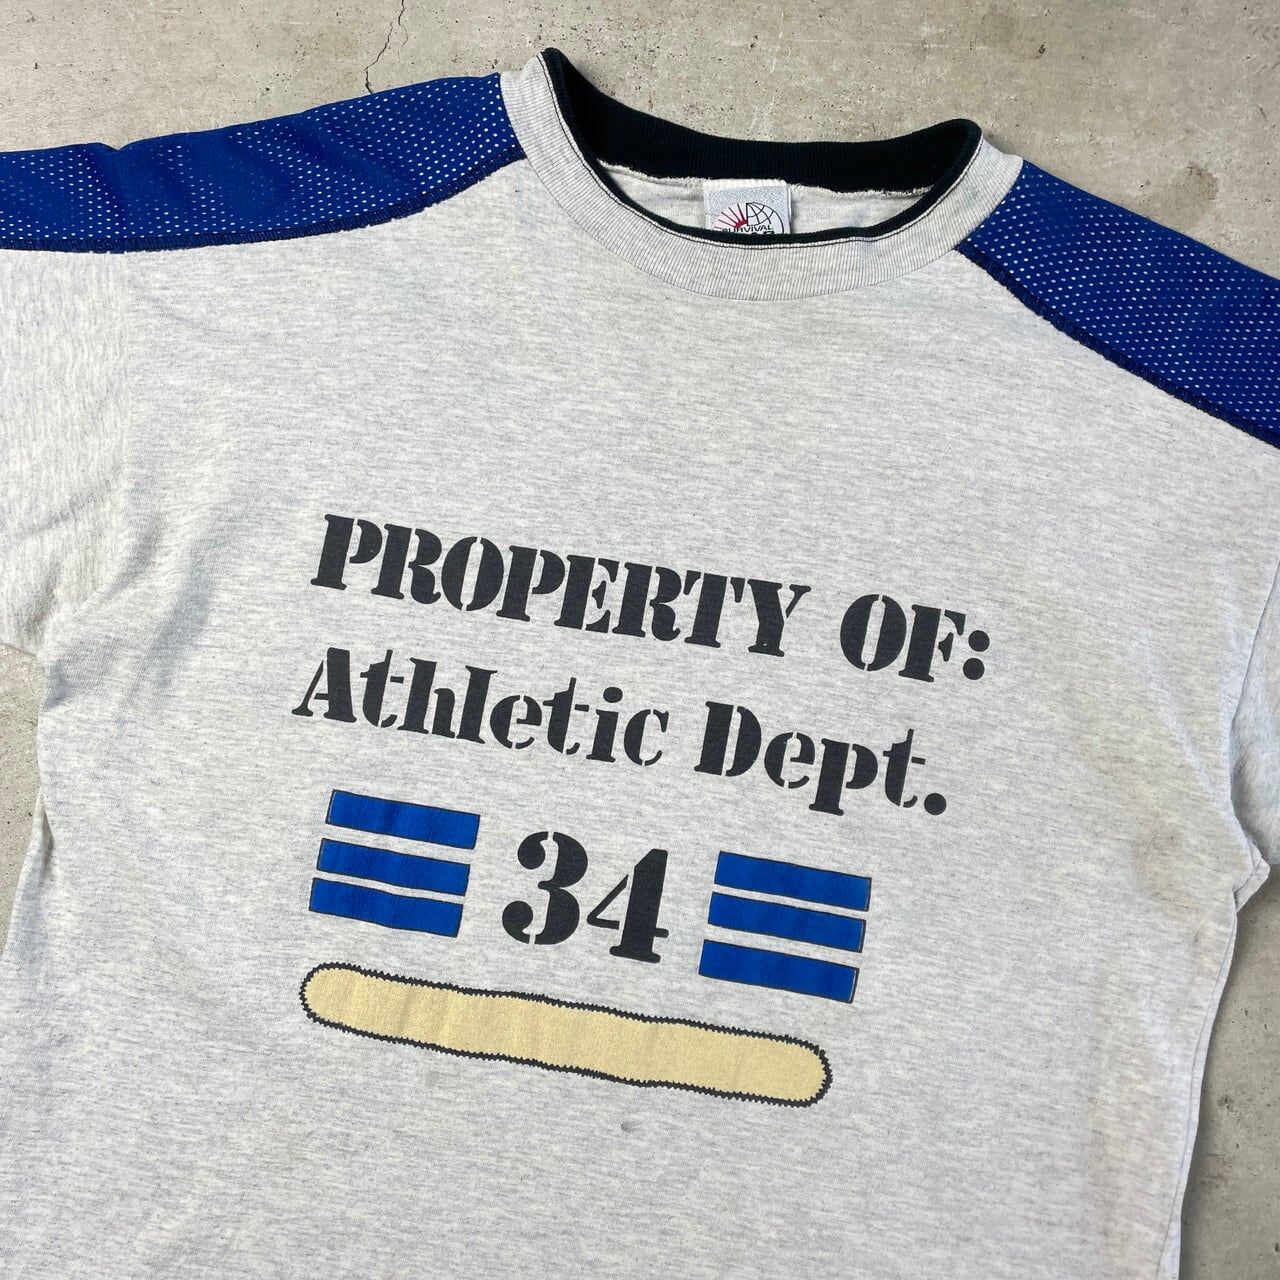 USA製 90年代 PROPERTY OF ATHLETIC DEPT ロゴ プリントTシャツ メンズ